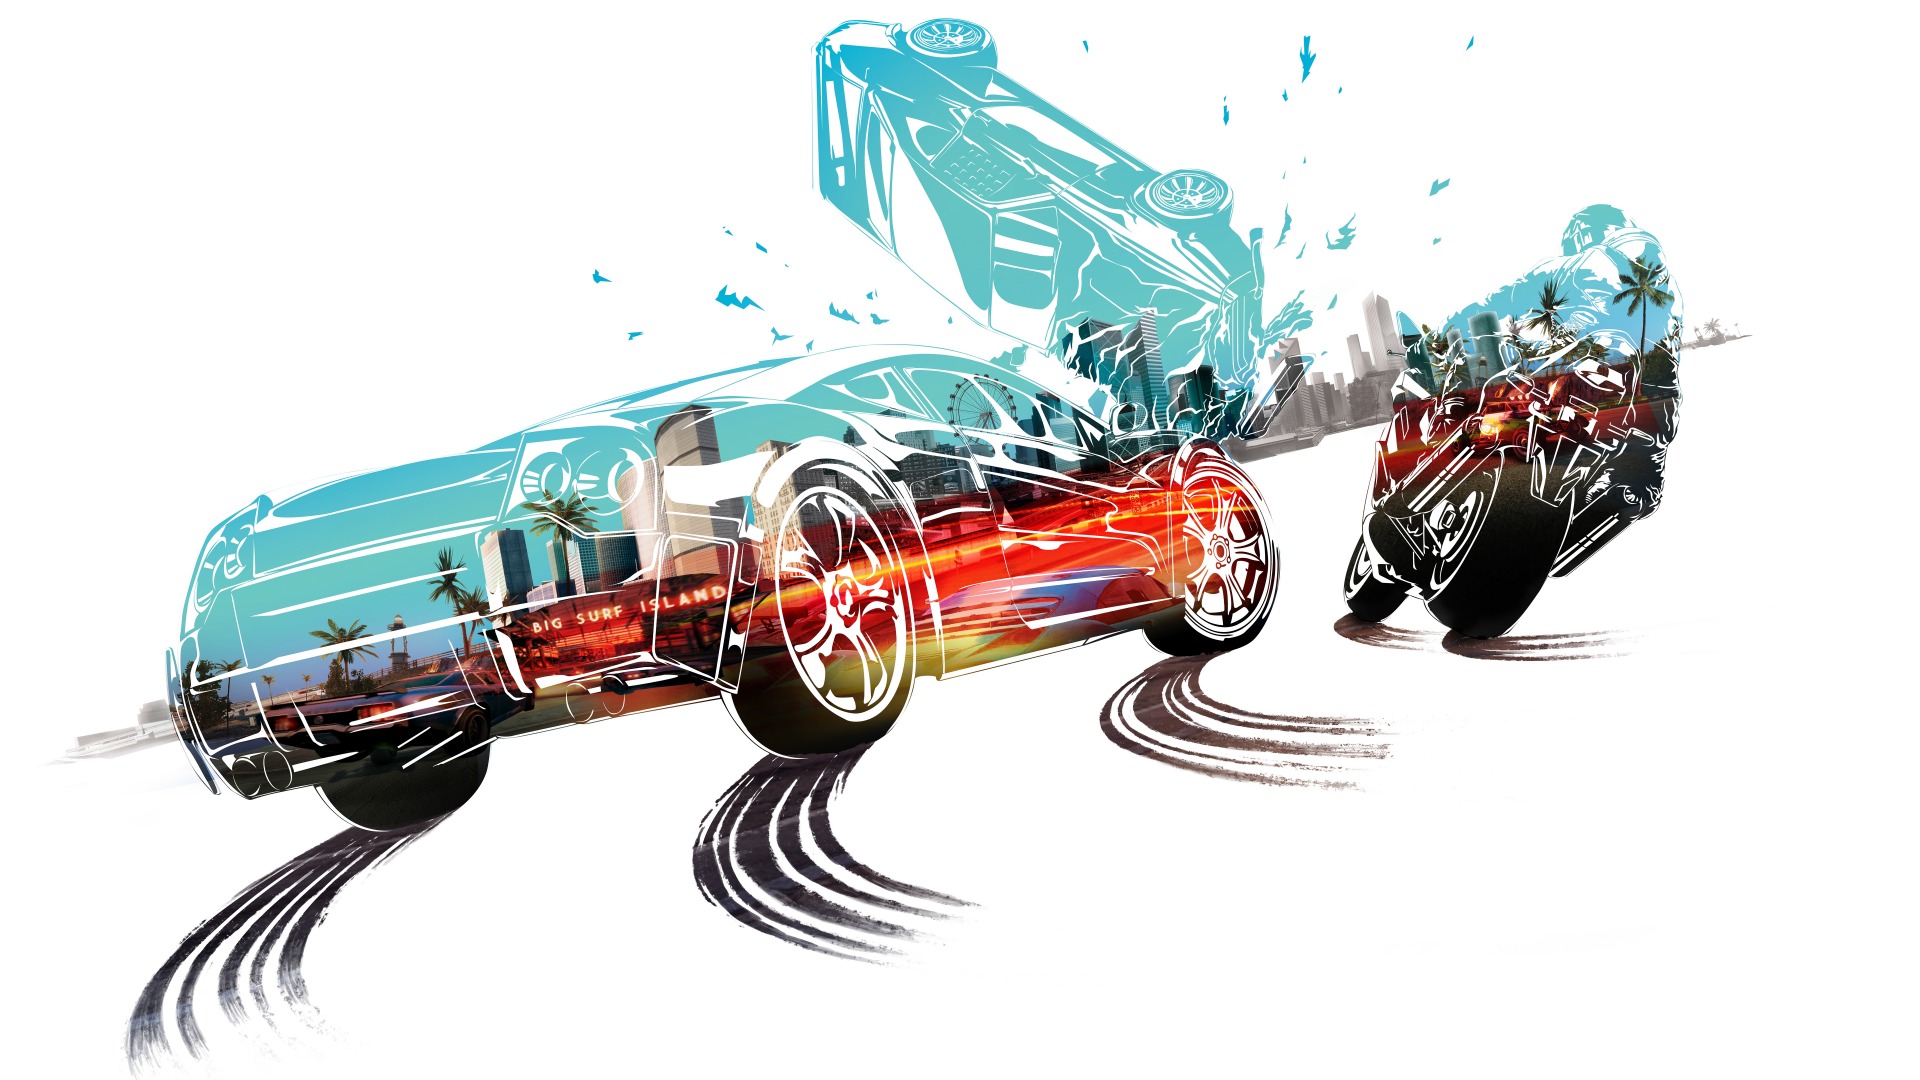 Artwork Burnout Paradise Video Games Cyan White Background Orange Tire Tracks Motorcycle Burnout Vid 1920x1080